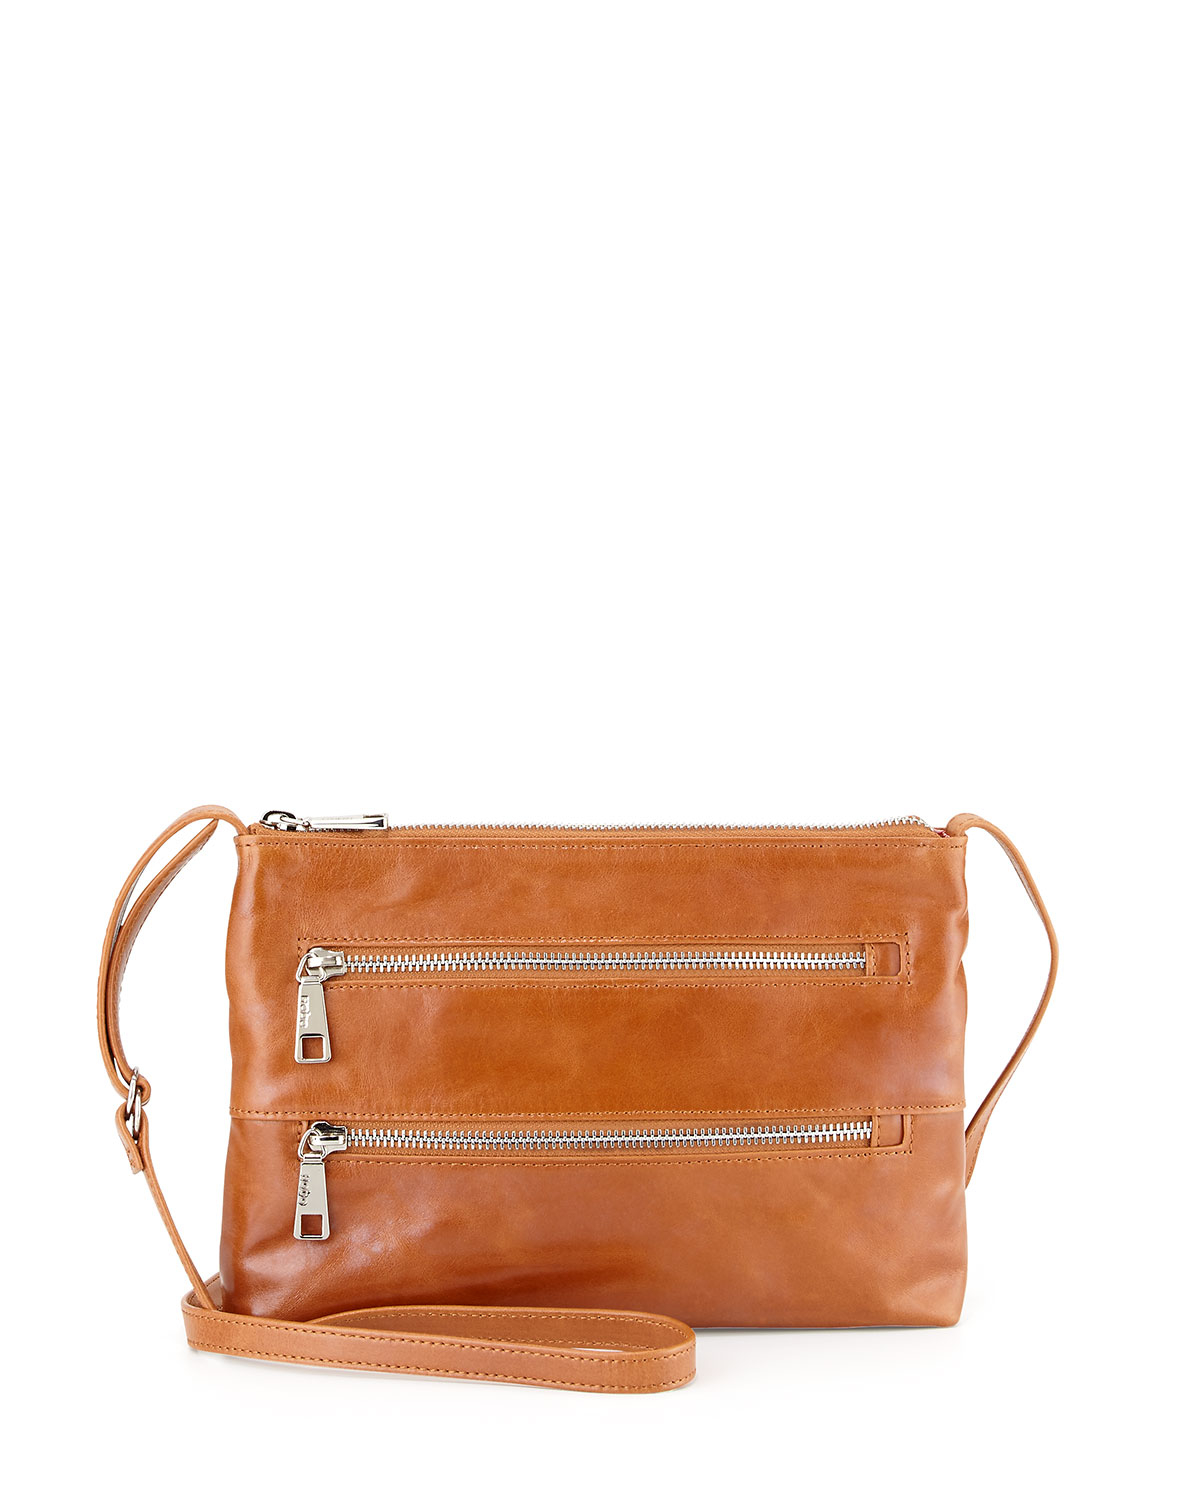 Lyst - Hobo Mara Small Zip Crossbody Bag in Orange